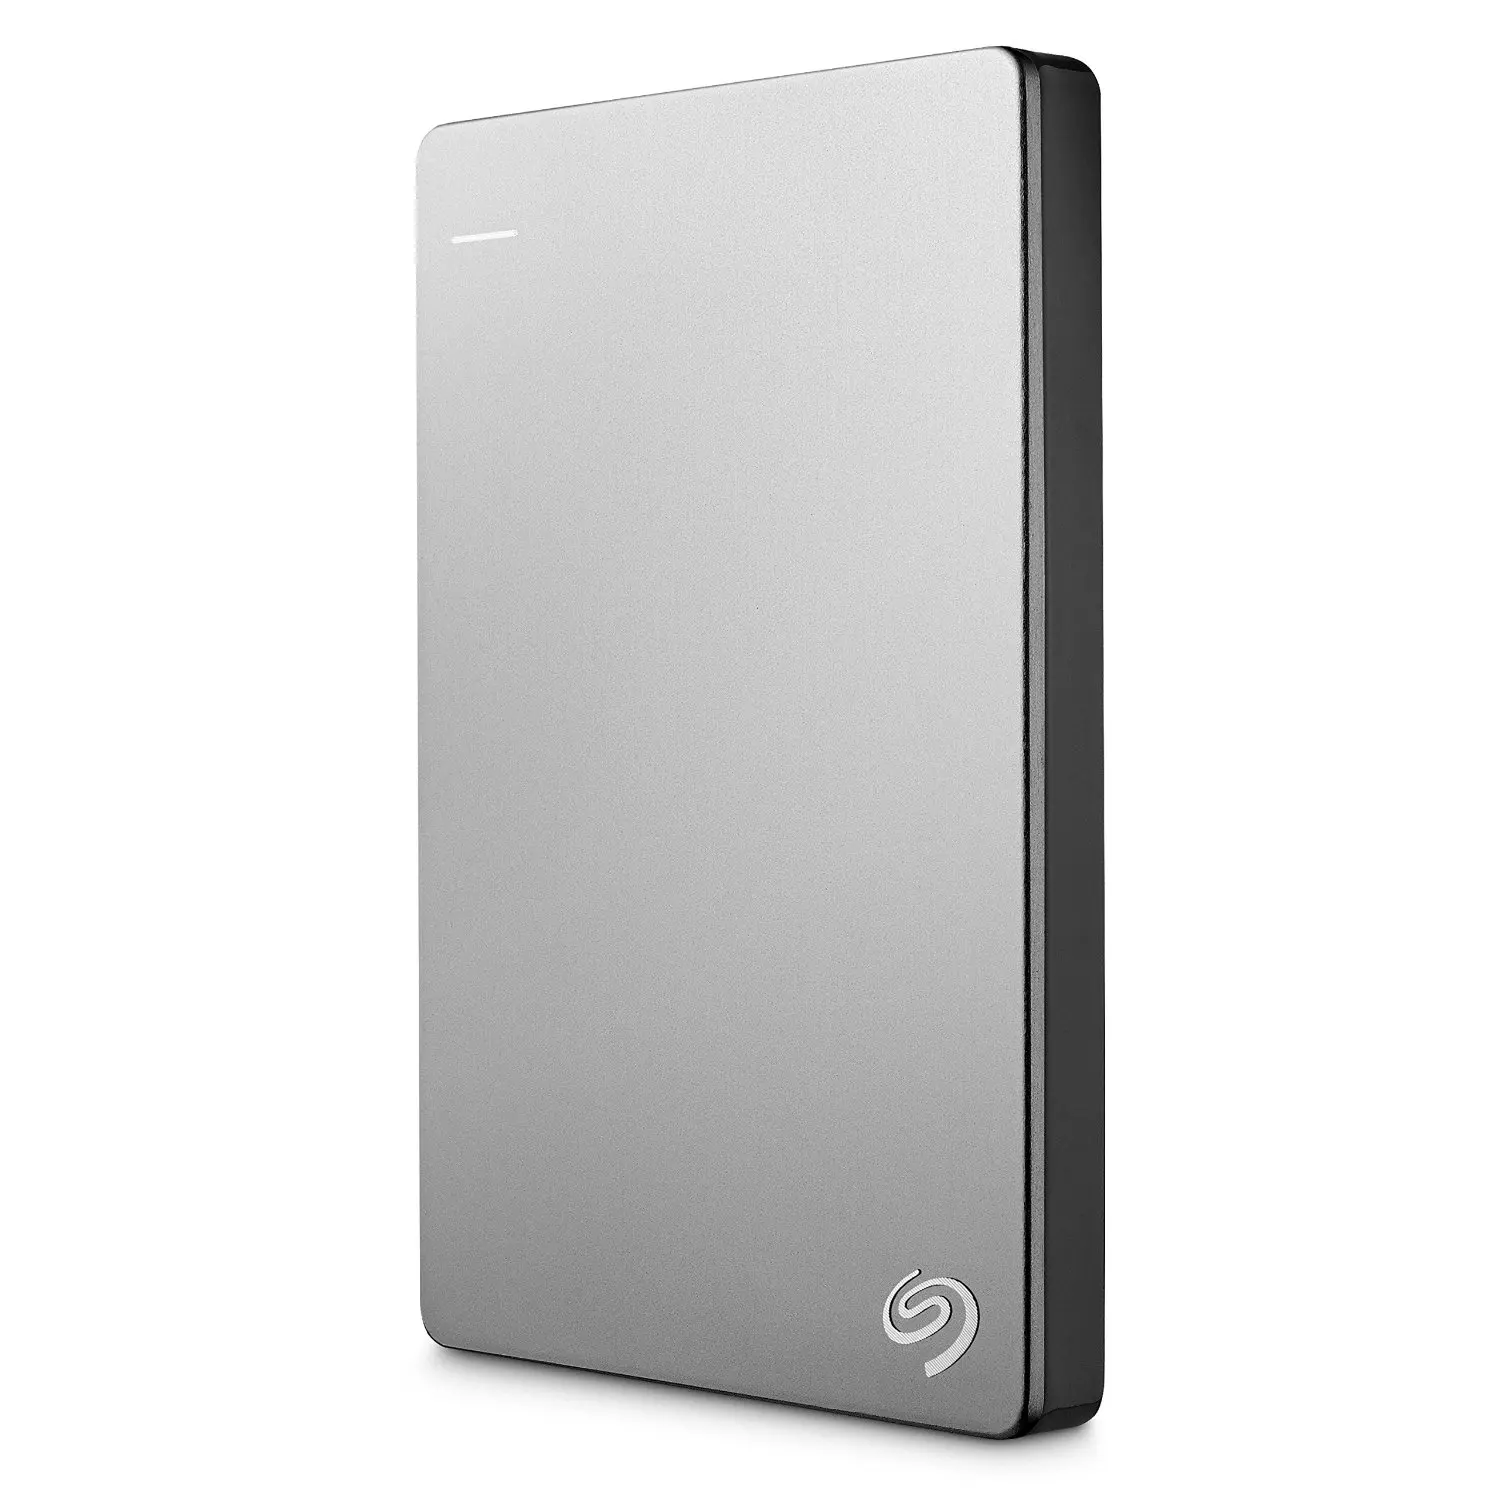 seagate - backup plus slim for mac 2tb external usb 3.0 portable hard drive - silver/black